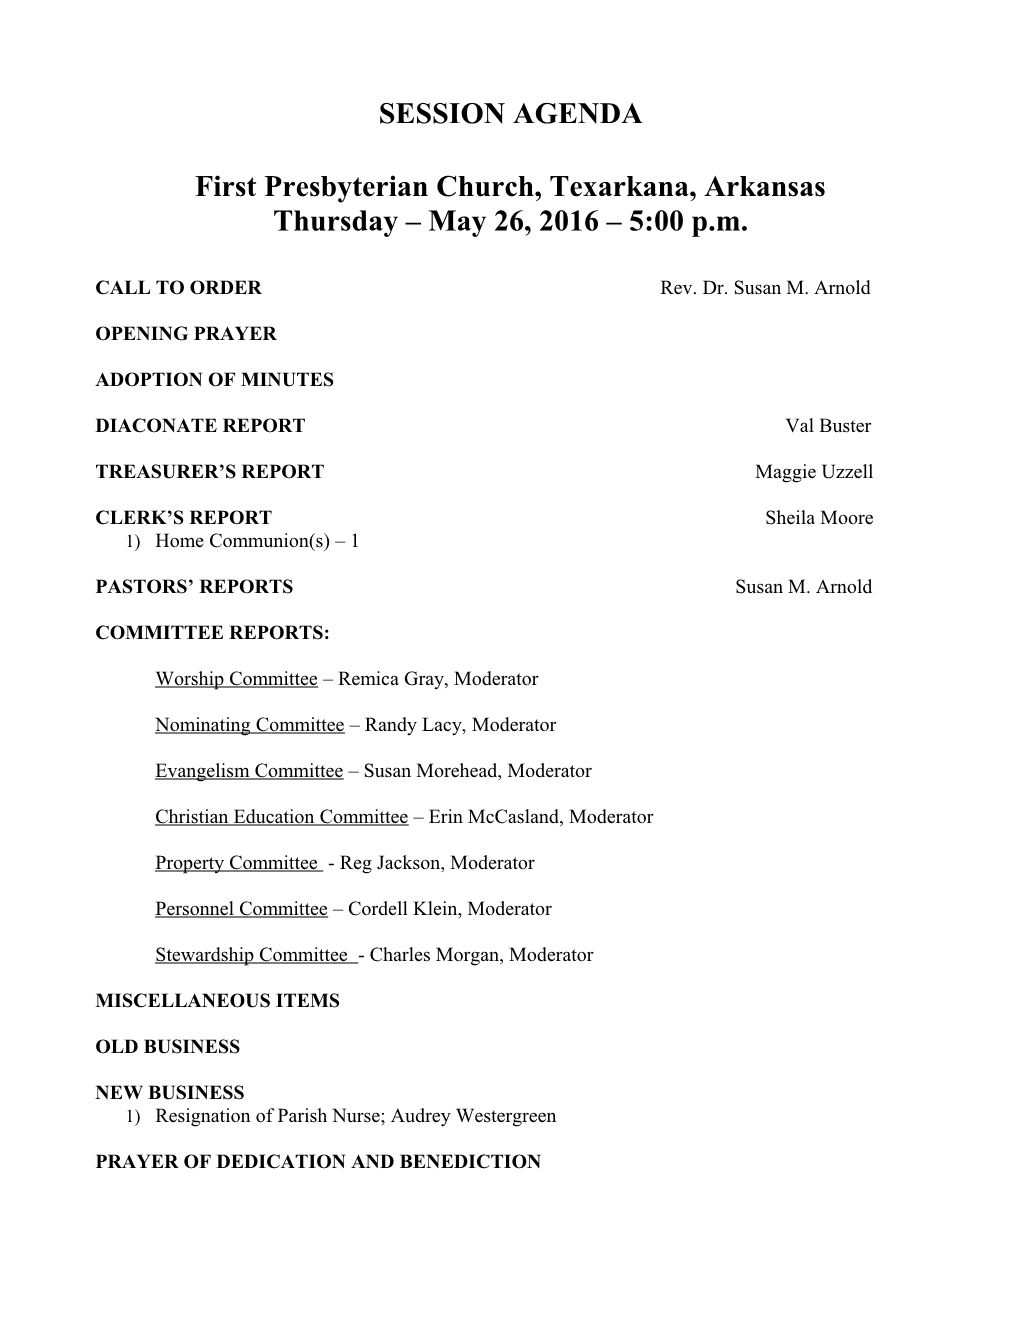 First Presbyterian Church, Texarkana, Arkansas